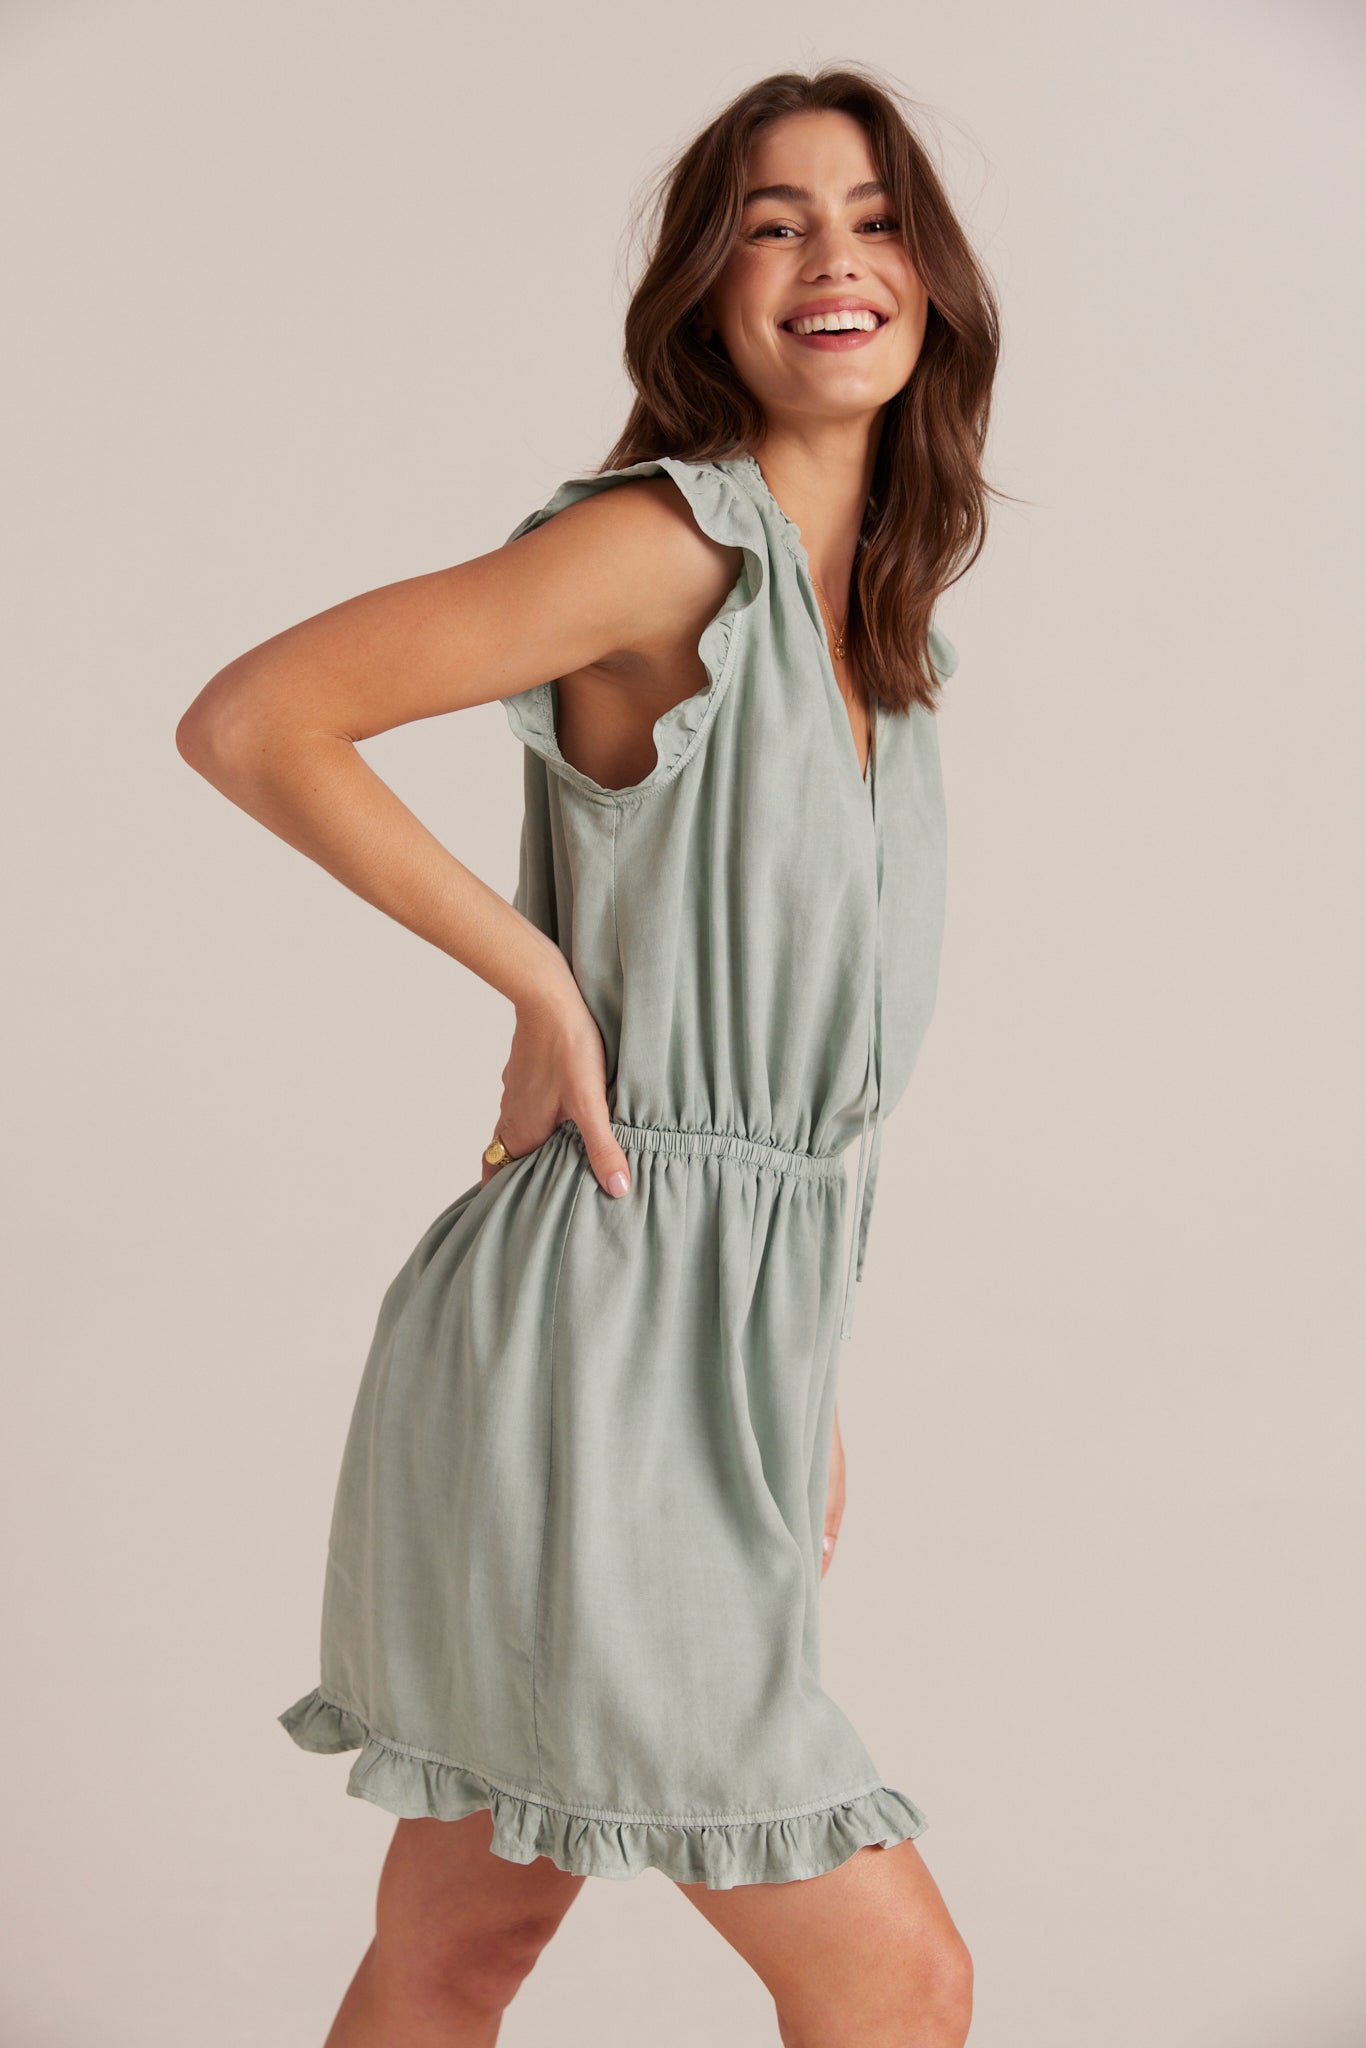 Bella DahlRuffle Sleeve Mini Dress - Oasis GreenDresses